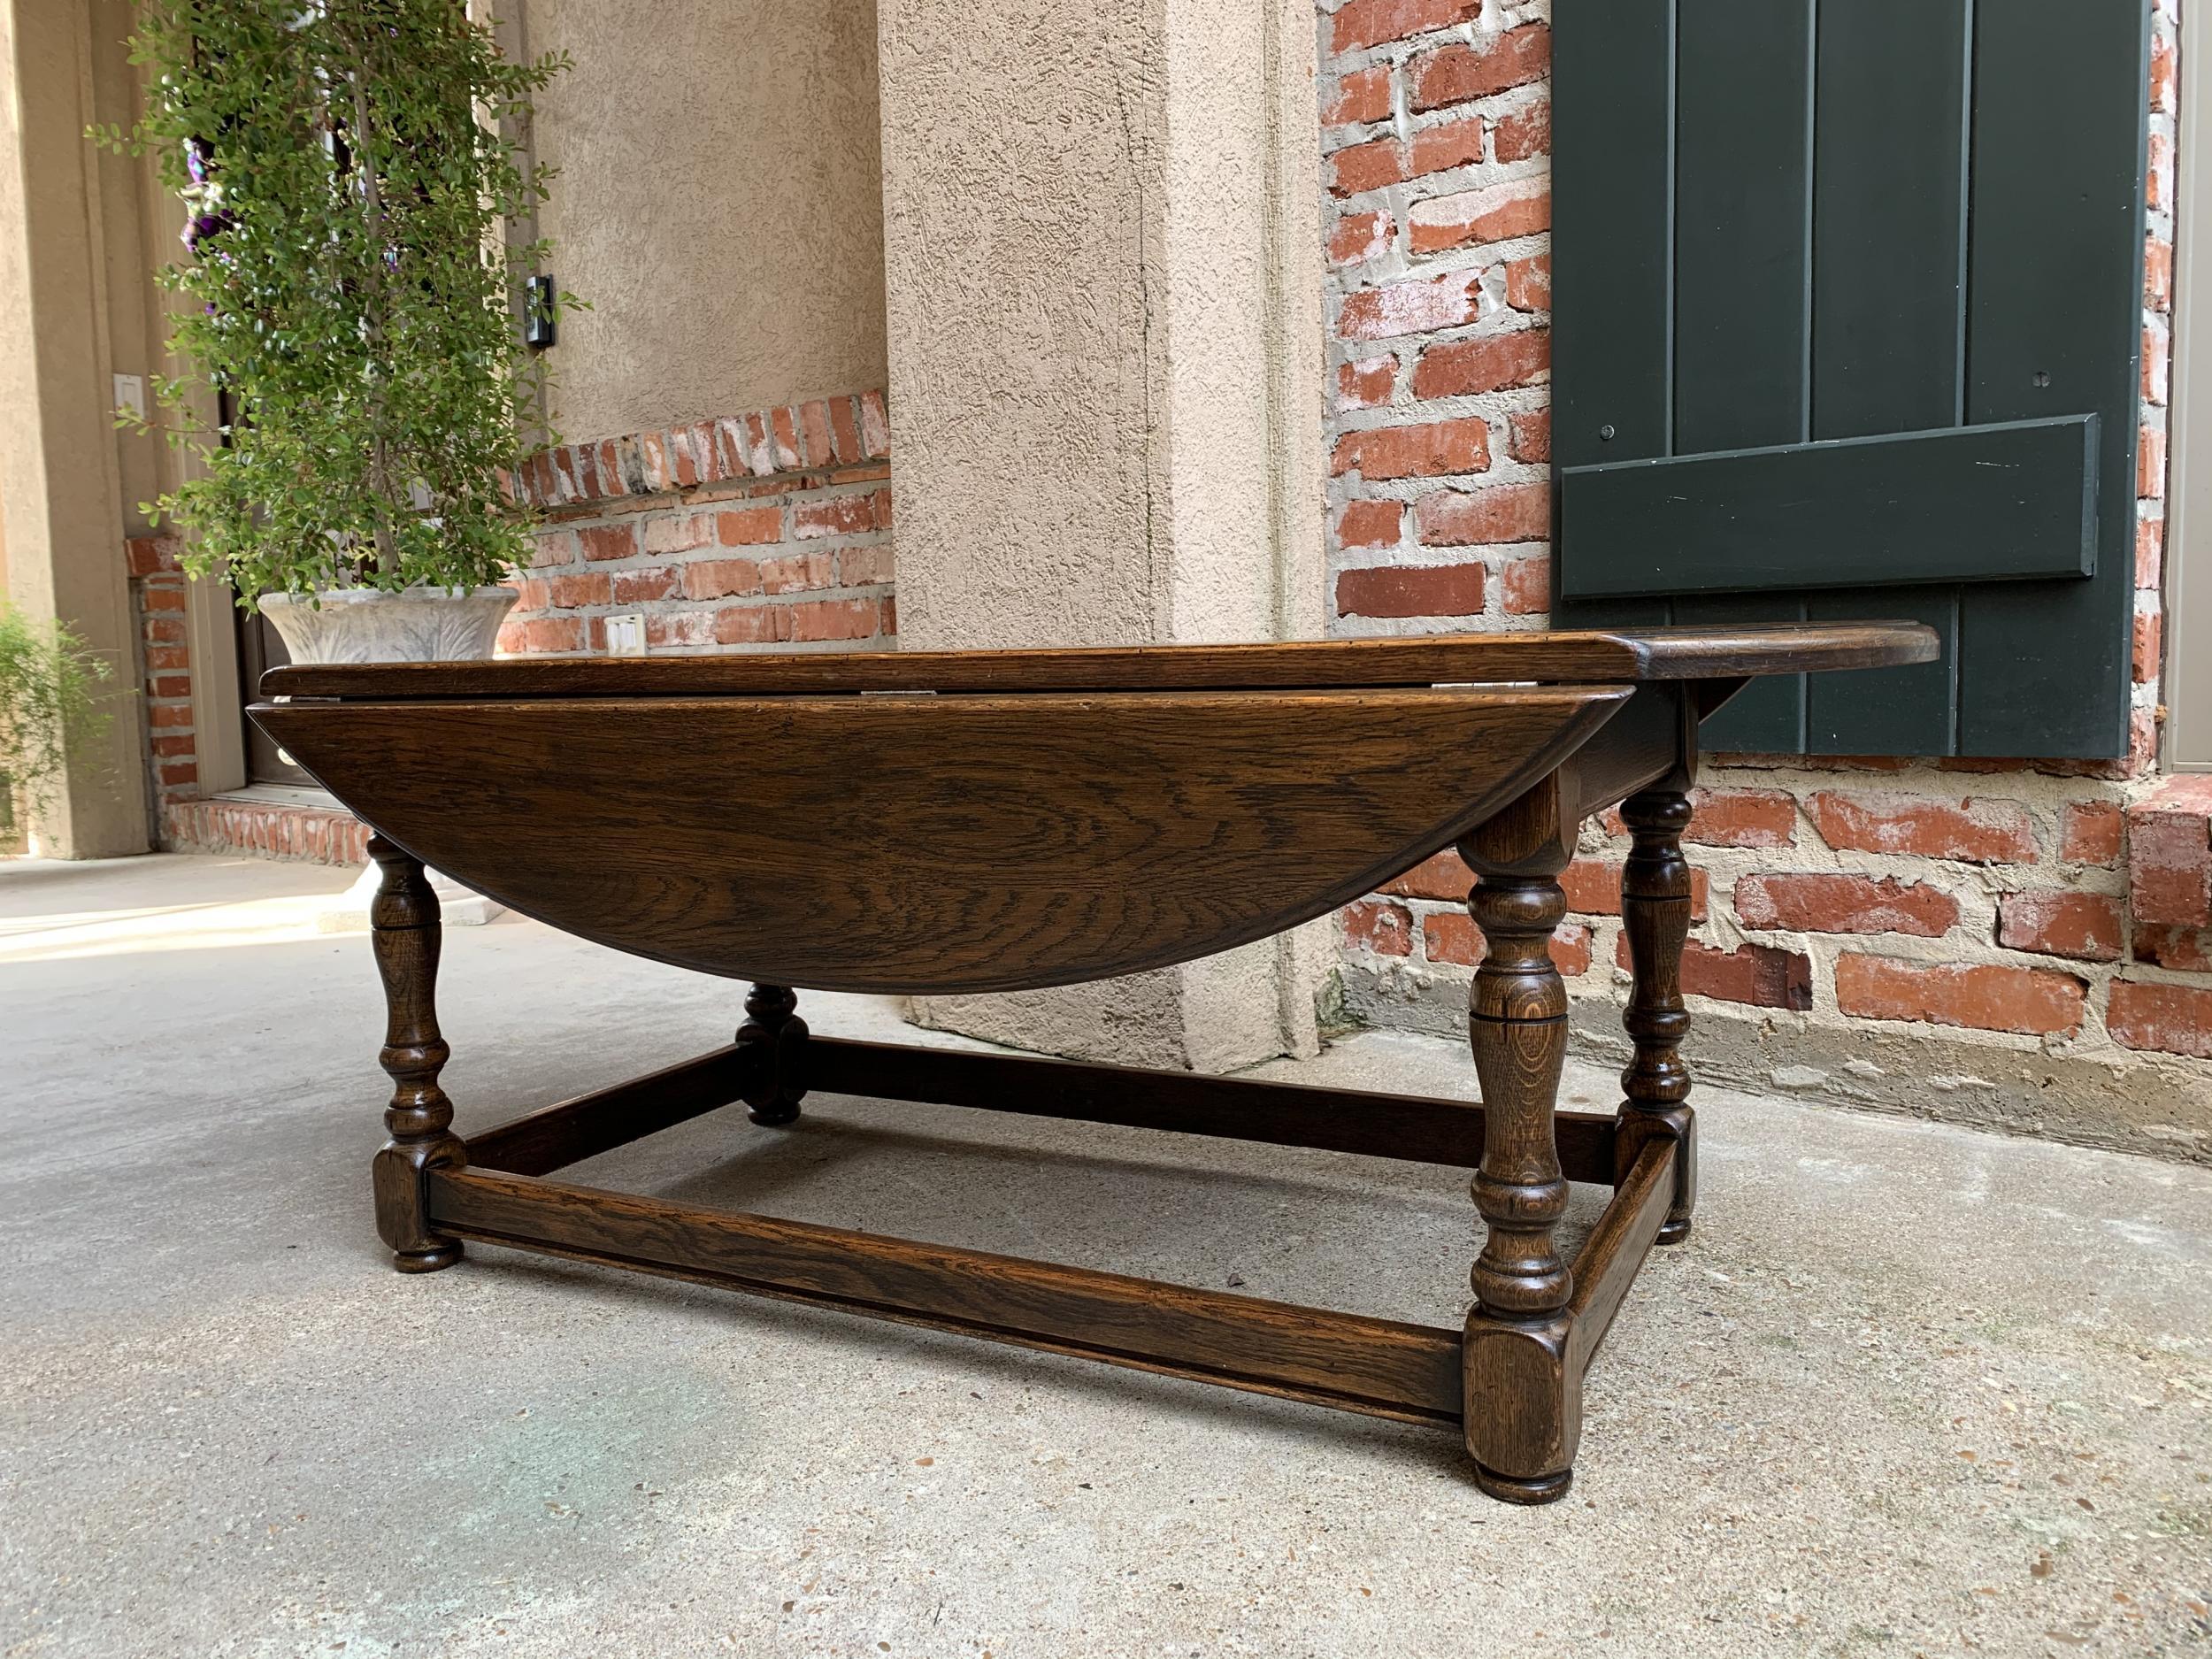 Mid-20th Century Vintage English Coffee Table Slender Drop-Leaf Jacobean Wake Table Style Oval